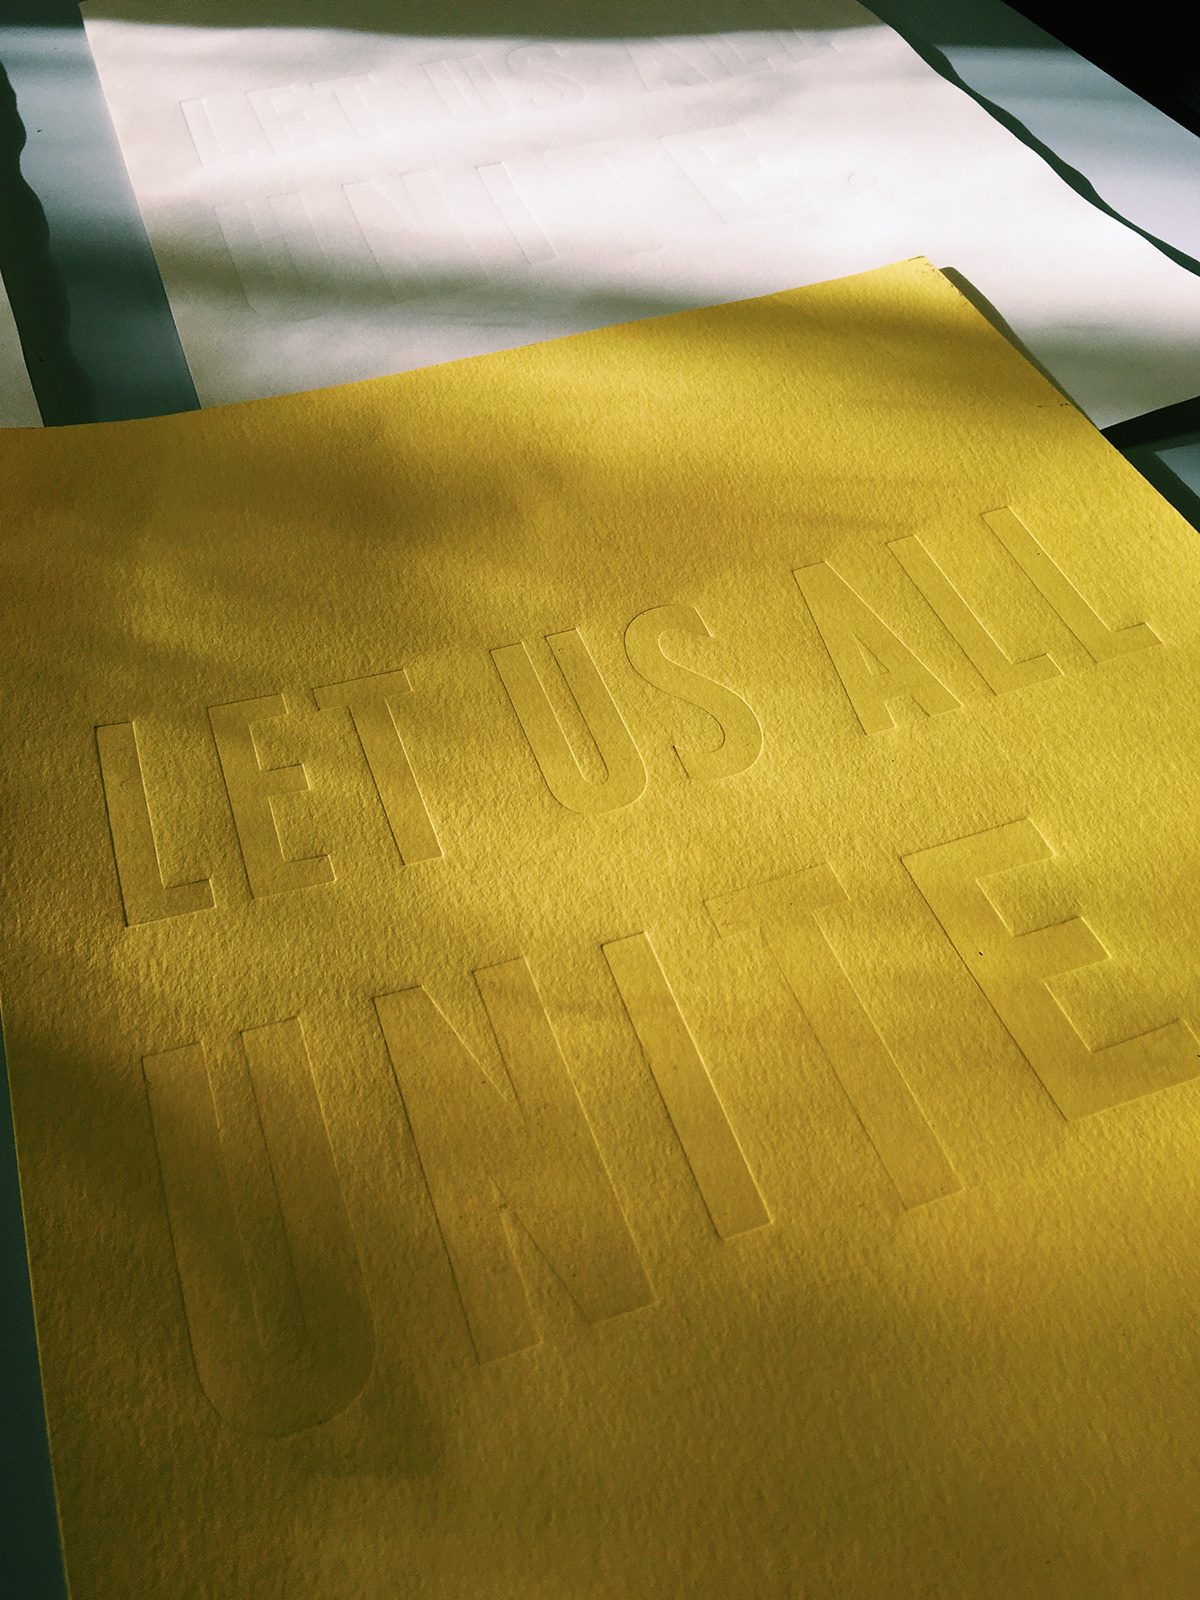 manifesto typography   campaign speech letterpress poem graphic design 